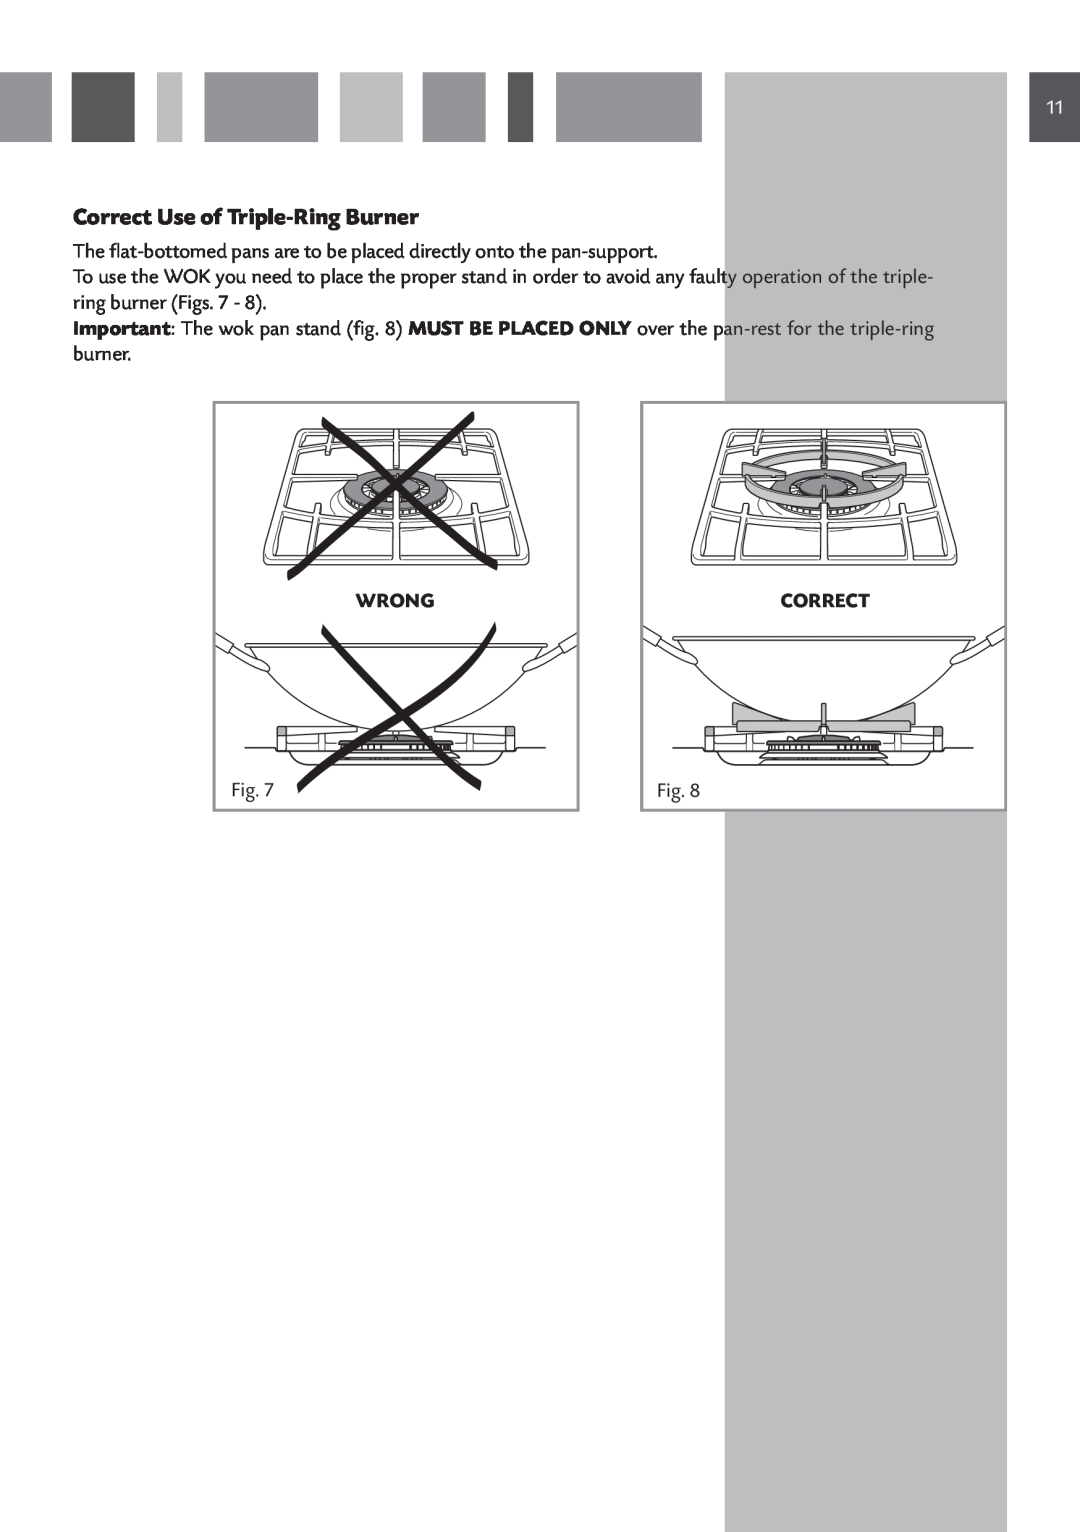 CDA RV 1001, RV 901 manual Correct Use of Triple-Ring Burner, Wrong 